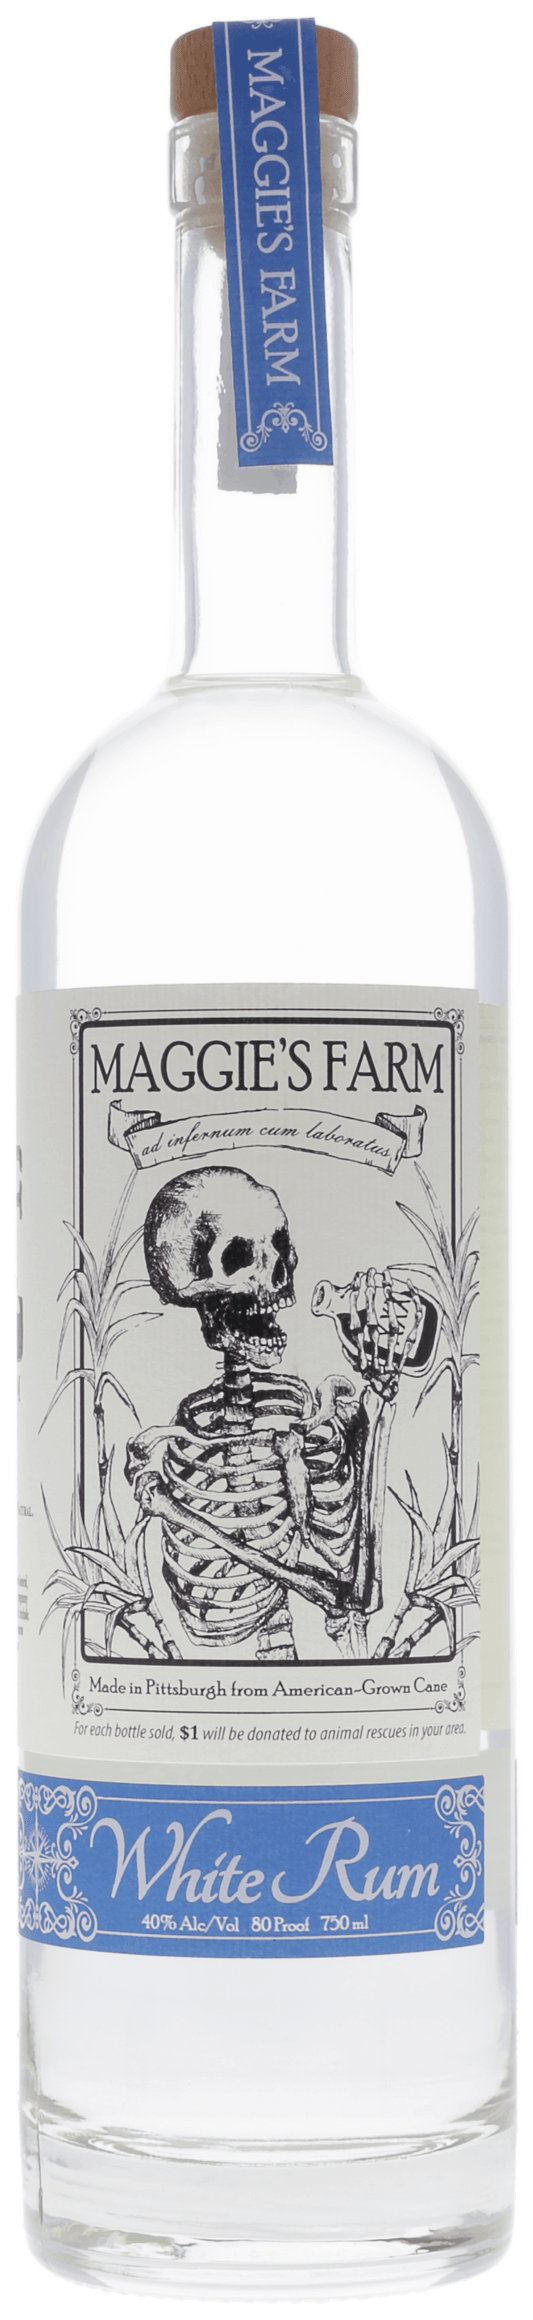 Maggie's Farm White Rum